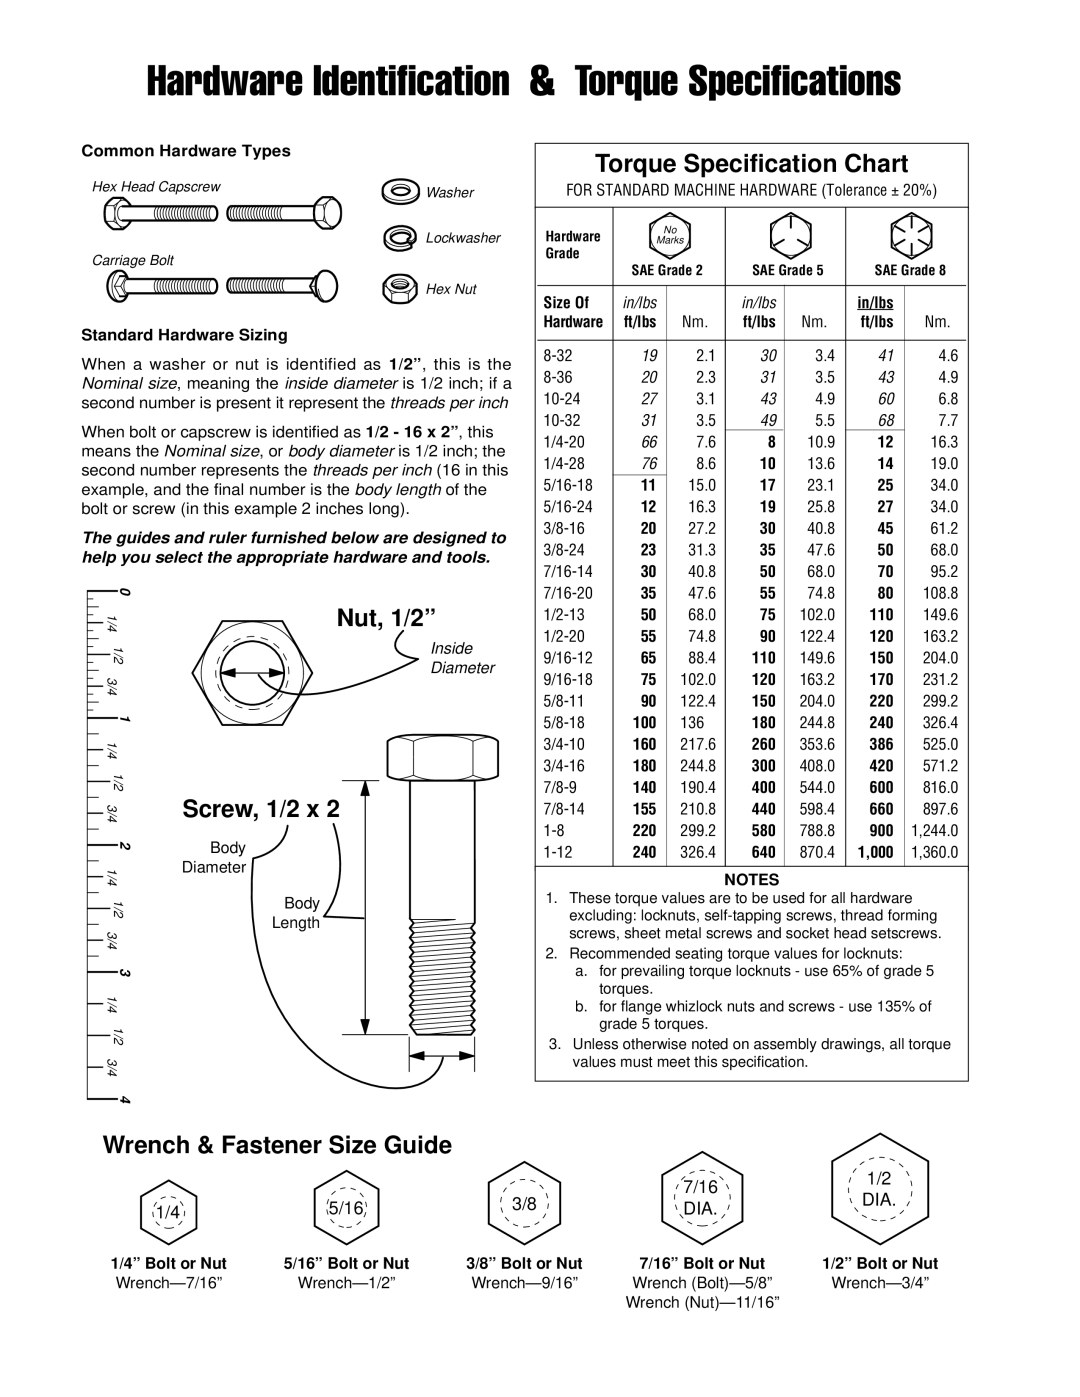 Snapper 2392 manual Hardware Identification & Torque Specifications, Torque Specification Chart, Nut, 1/2”, Screw, 1/2 